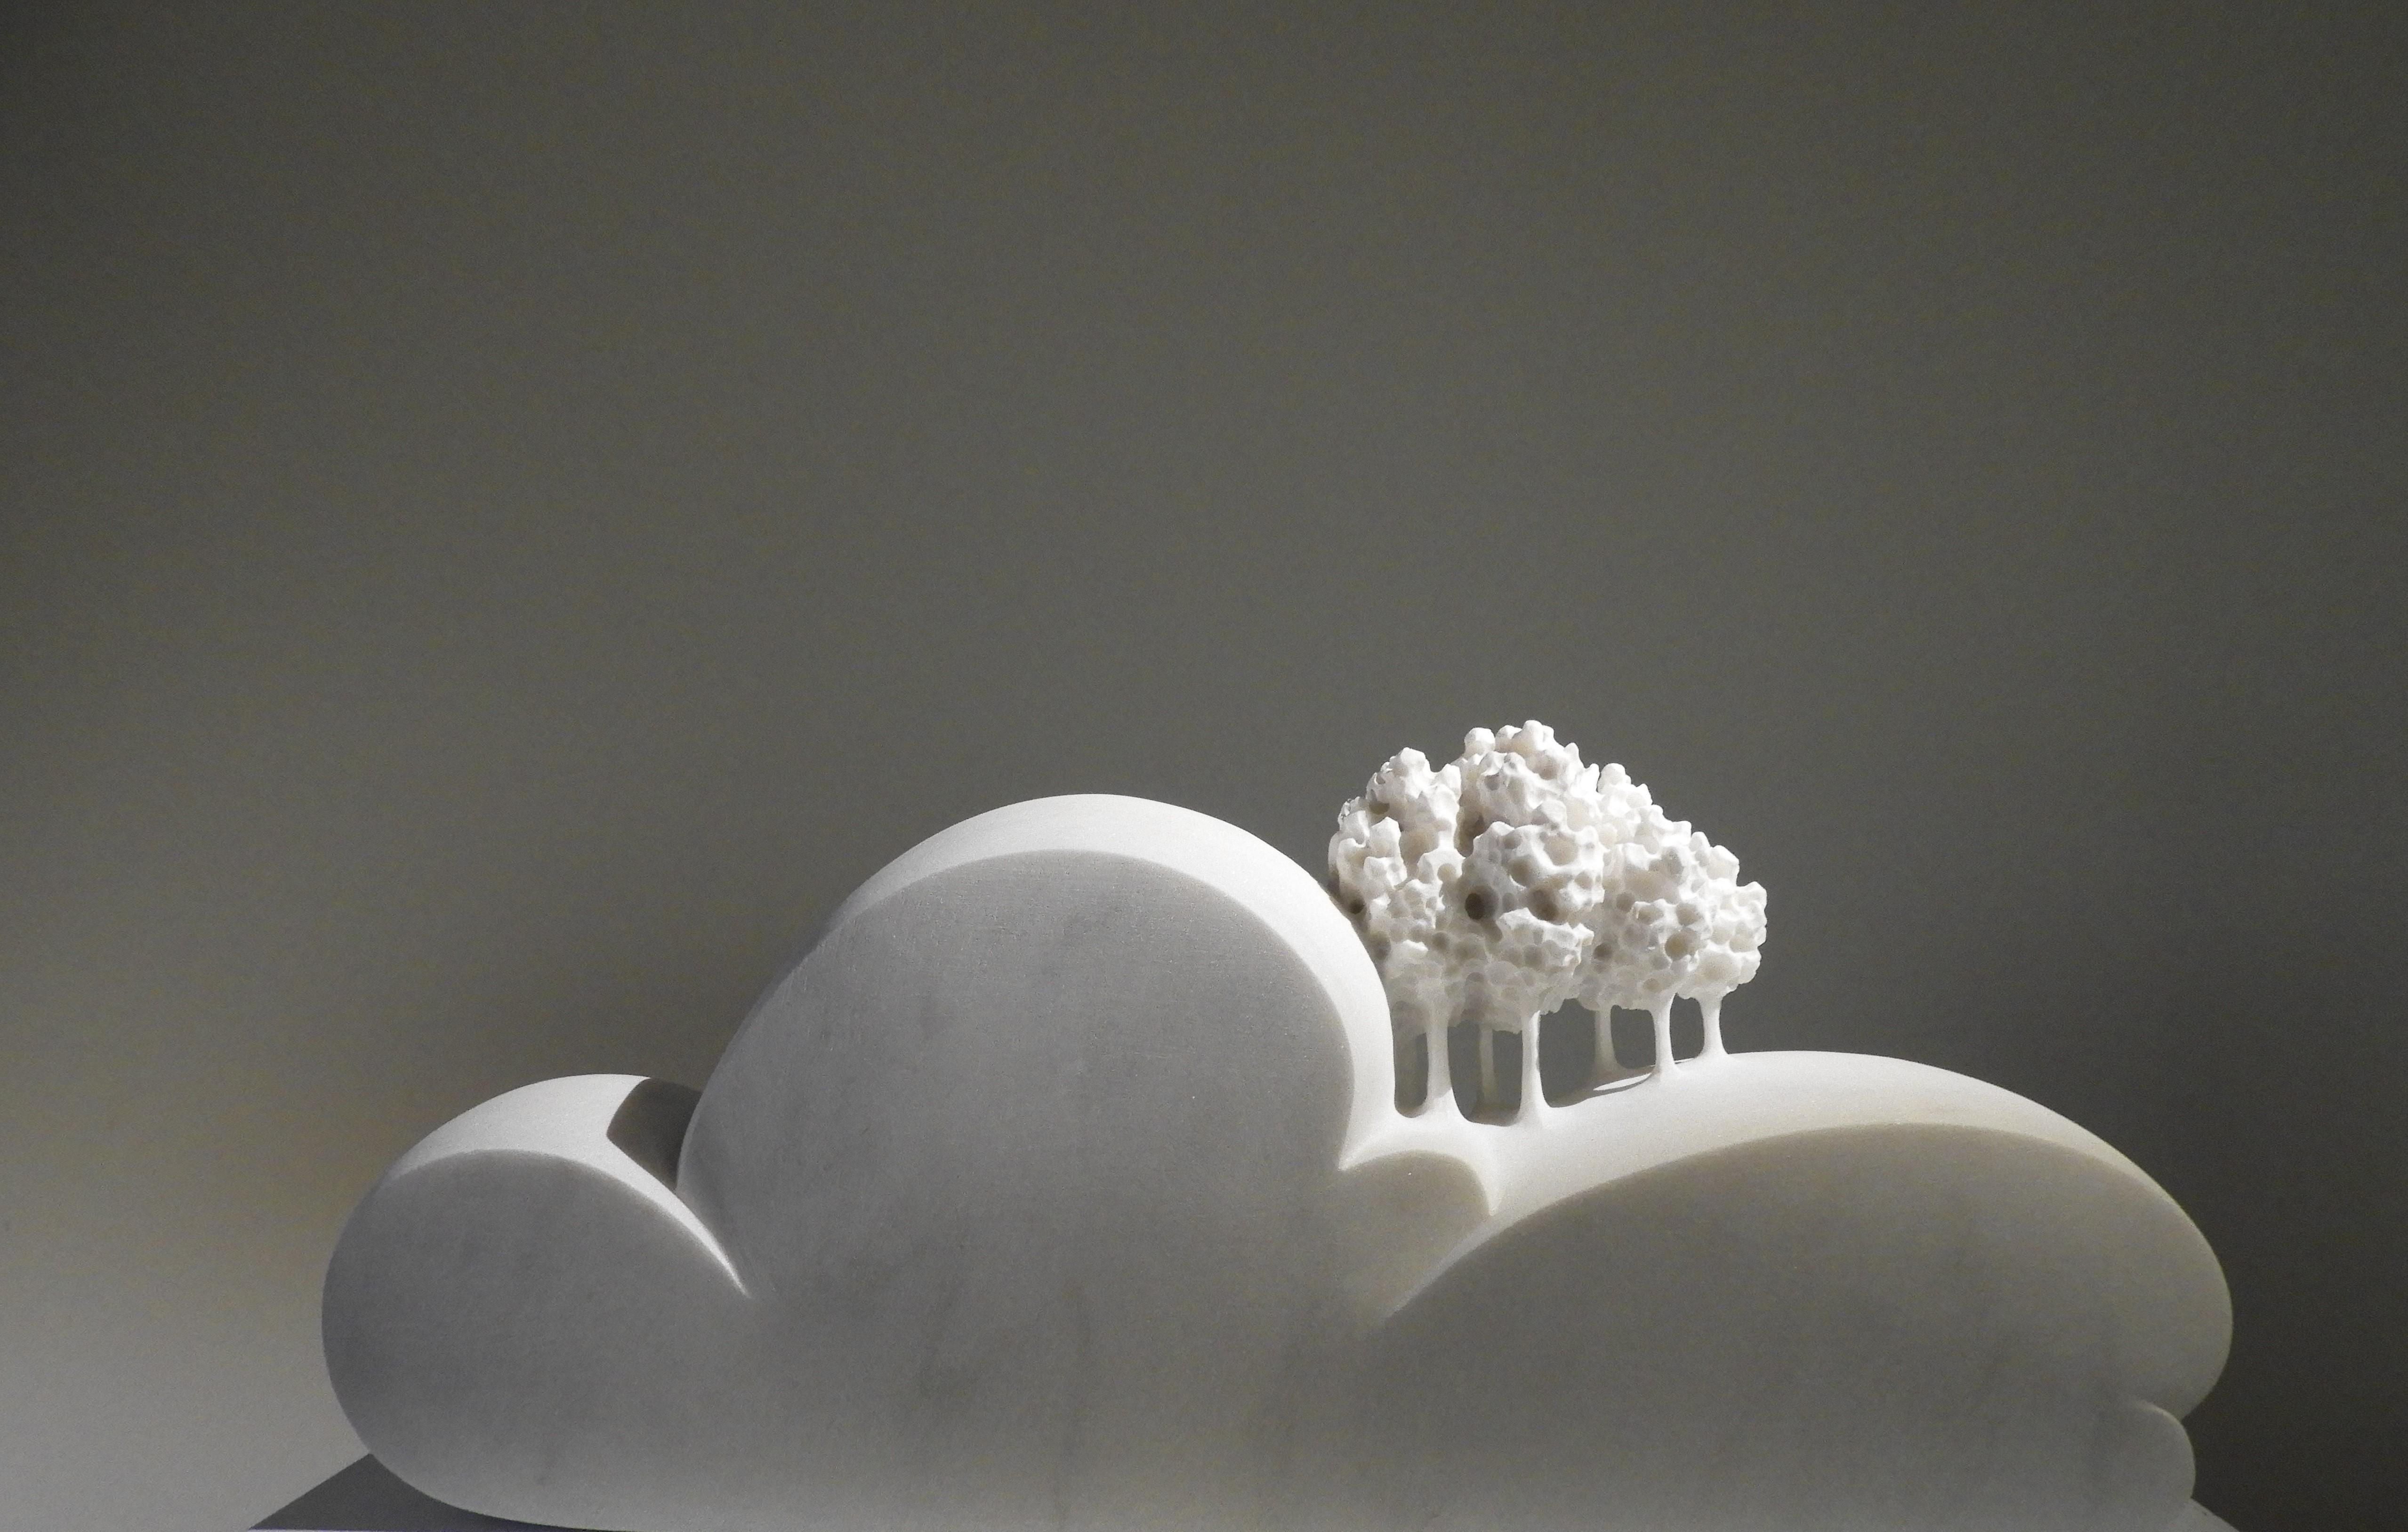 Over the Clouds - Sculpture by Filipe Curado